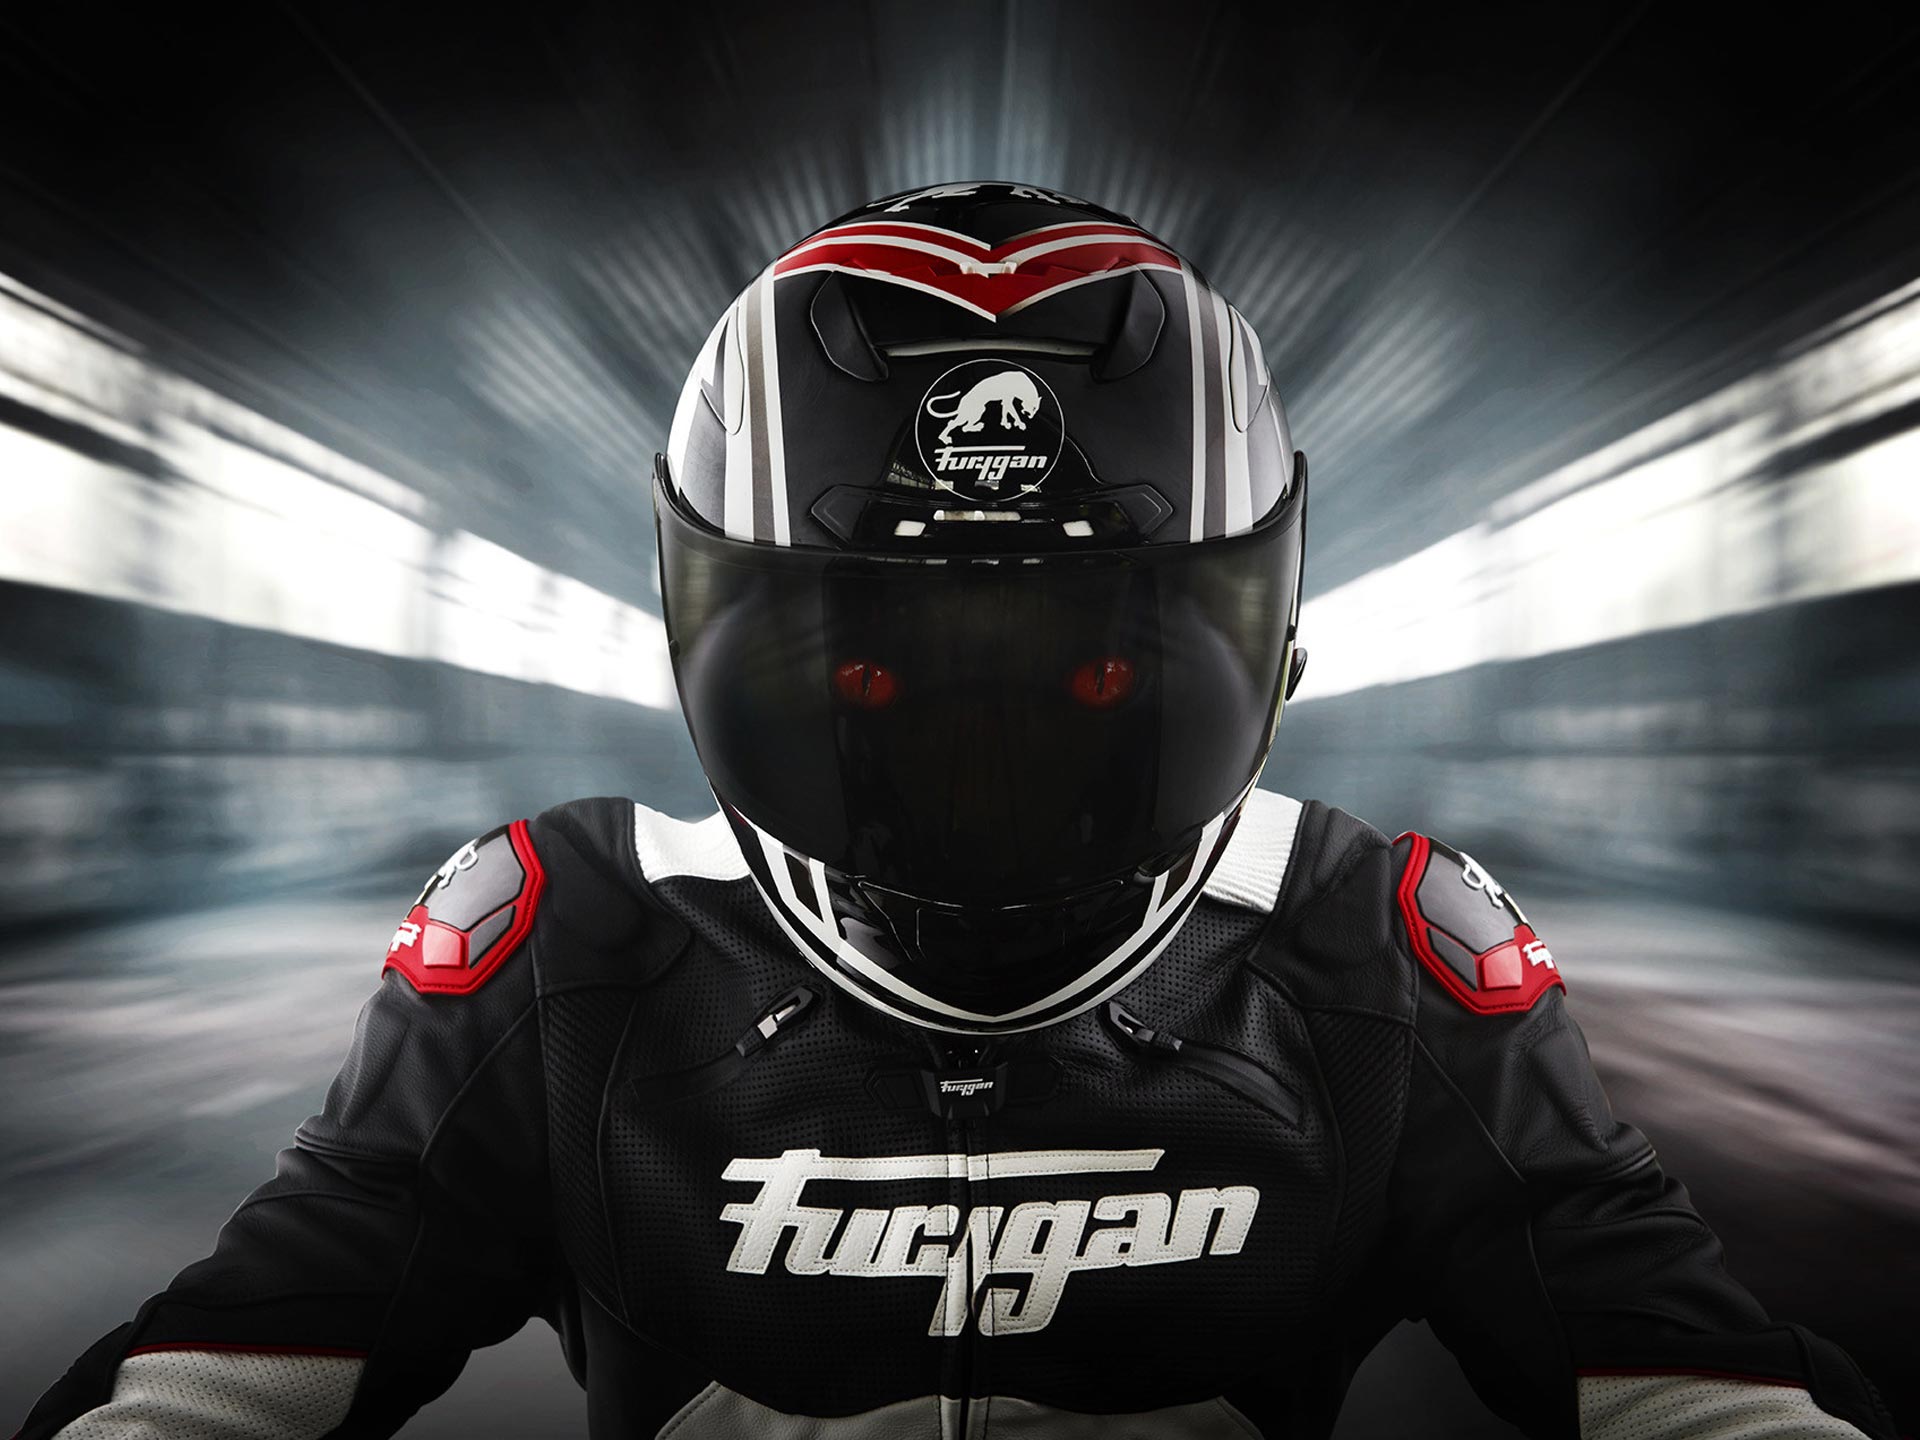 motorcyclist with Furygan Raptor Evo leather jacket